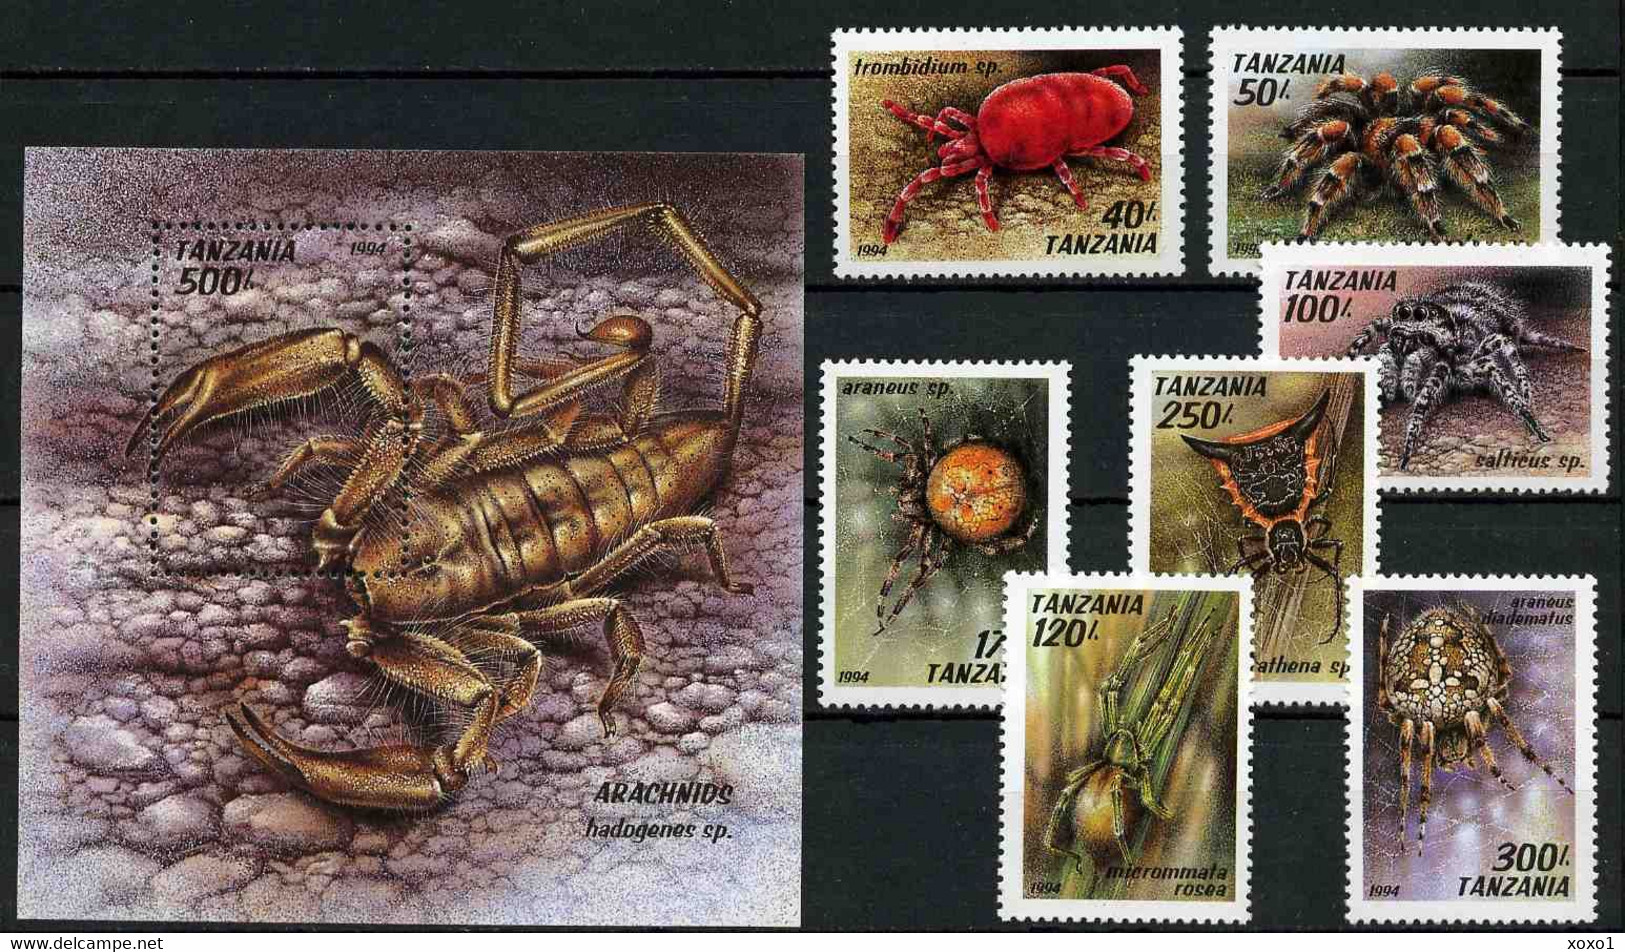 Tanzania 1994 MiNr. 1798 - 1805 (Block 255) Tansania Spiders Spinnentiere  7v+1 MNH**  11,10 € - Spinnen